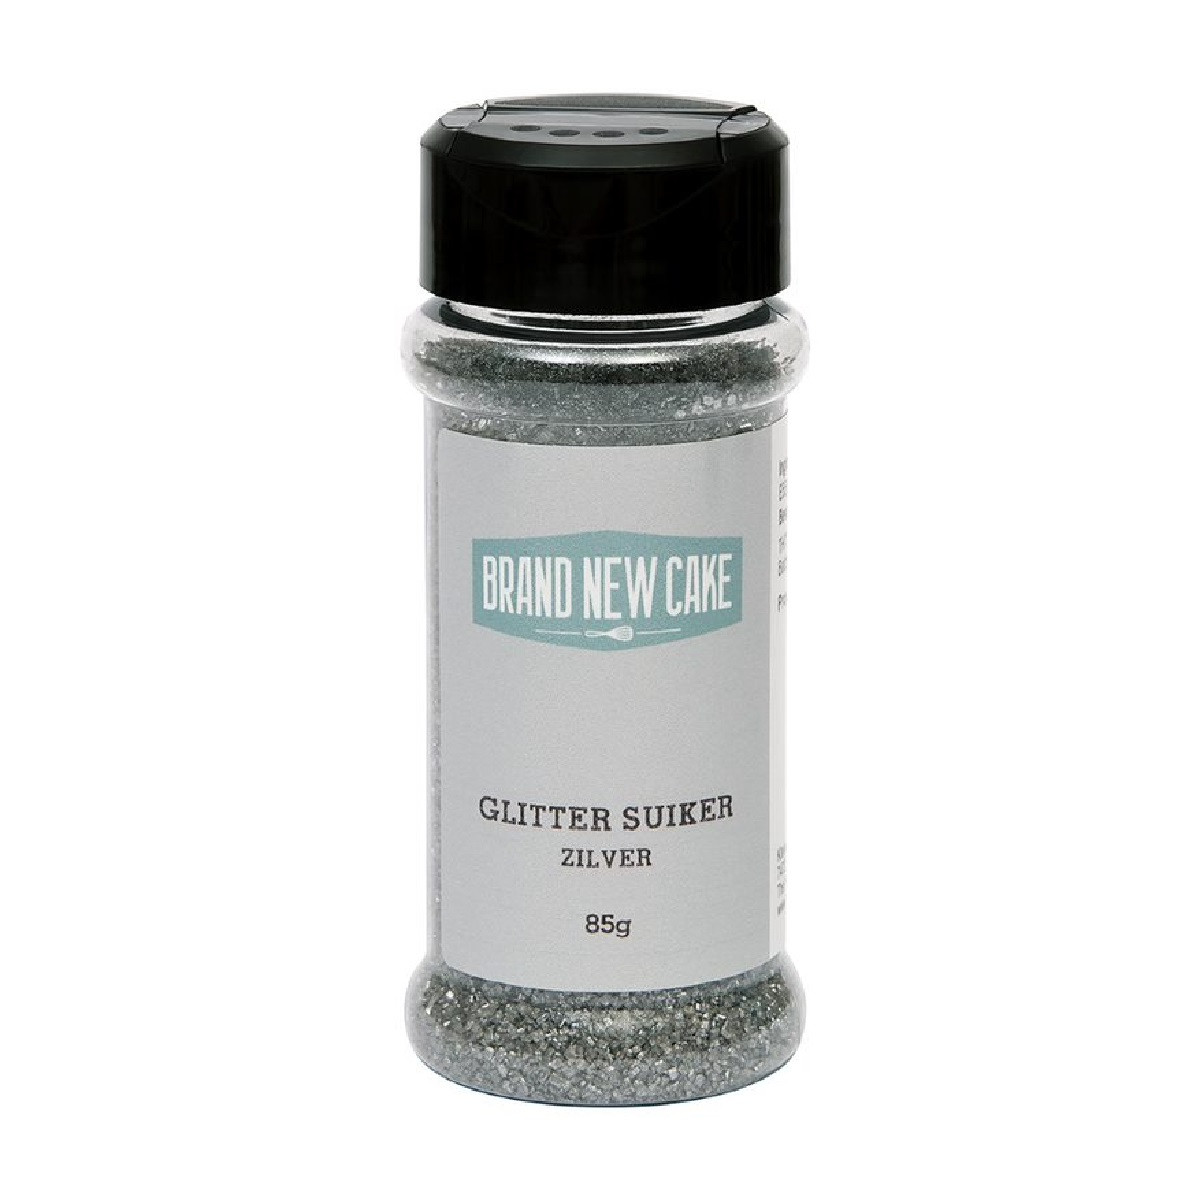 BrandNewCake Glitter Sugar Silver 85g